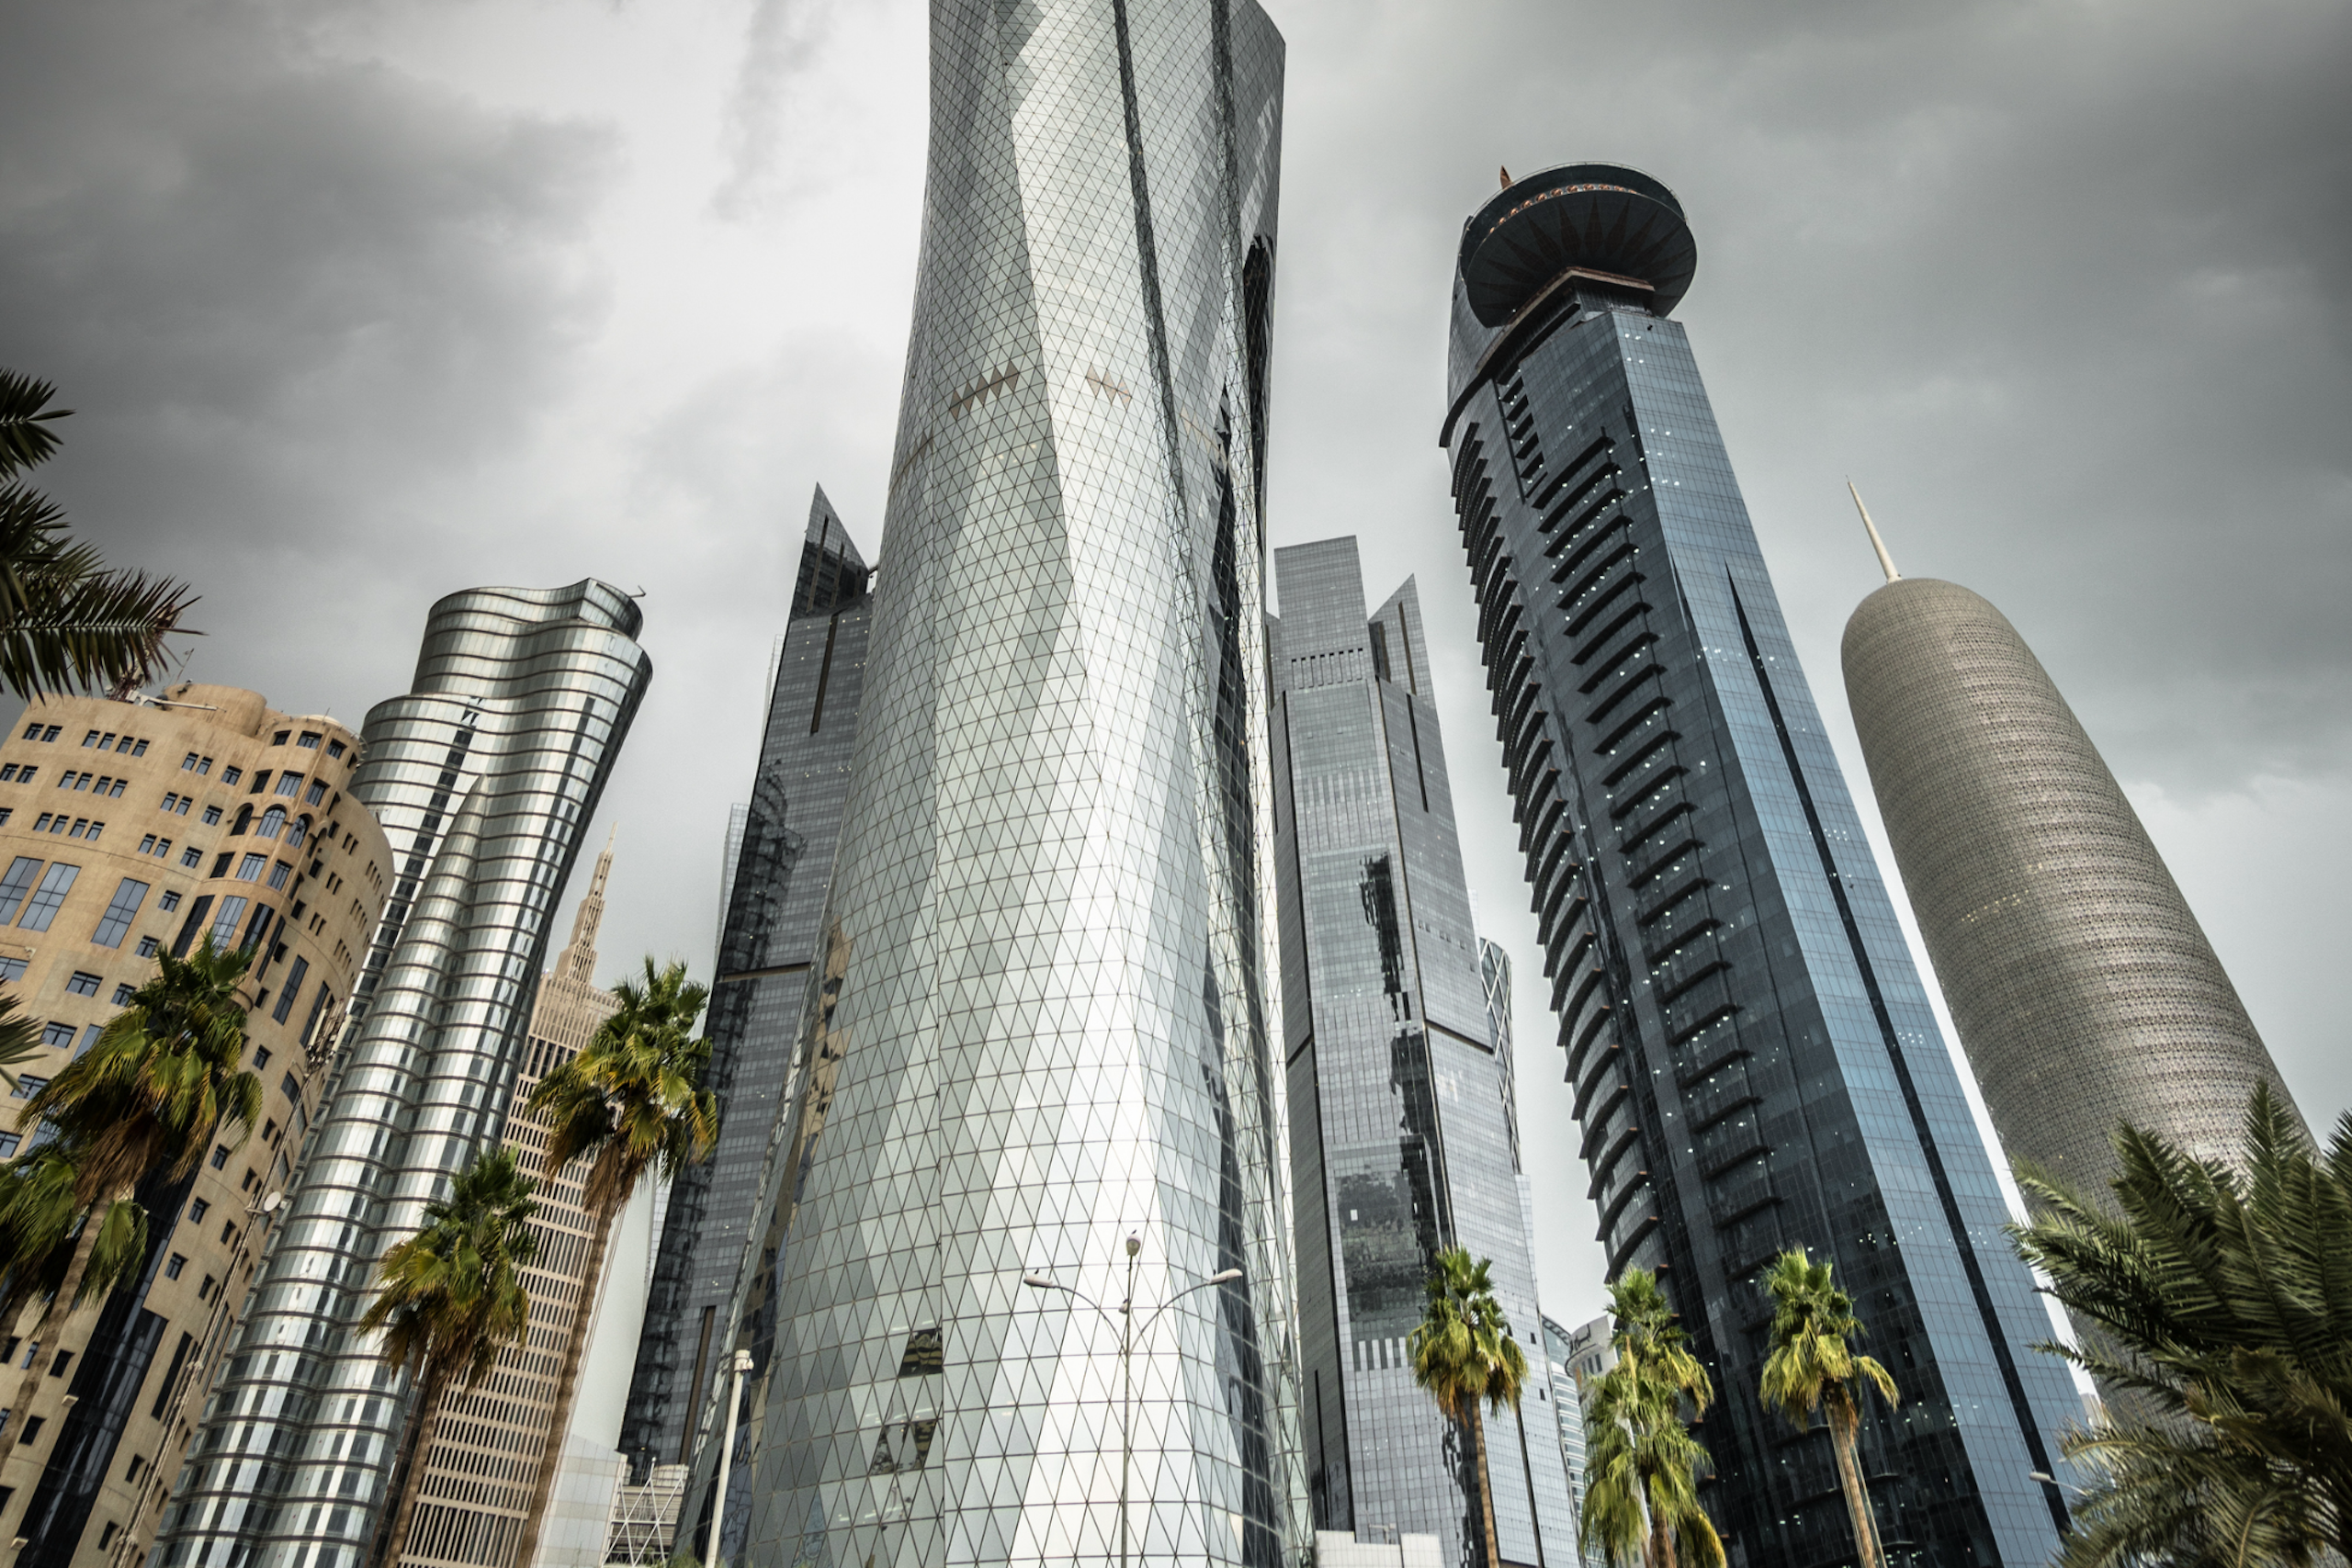 Qatar's modern cityscape